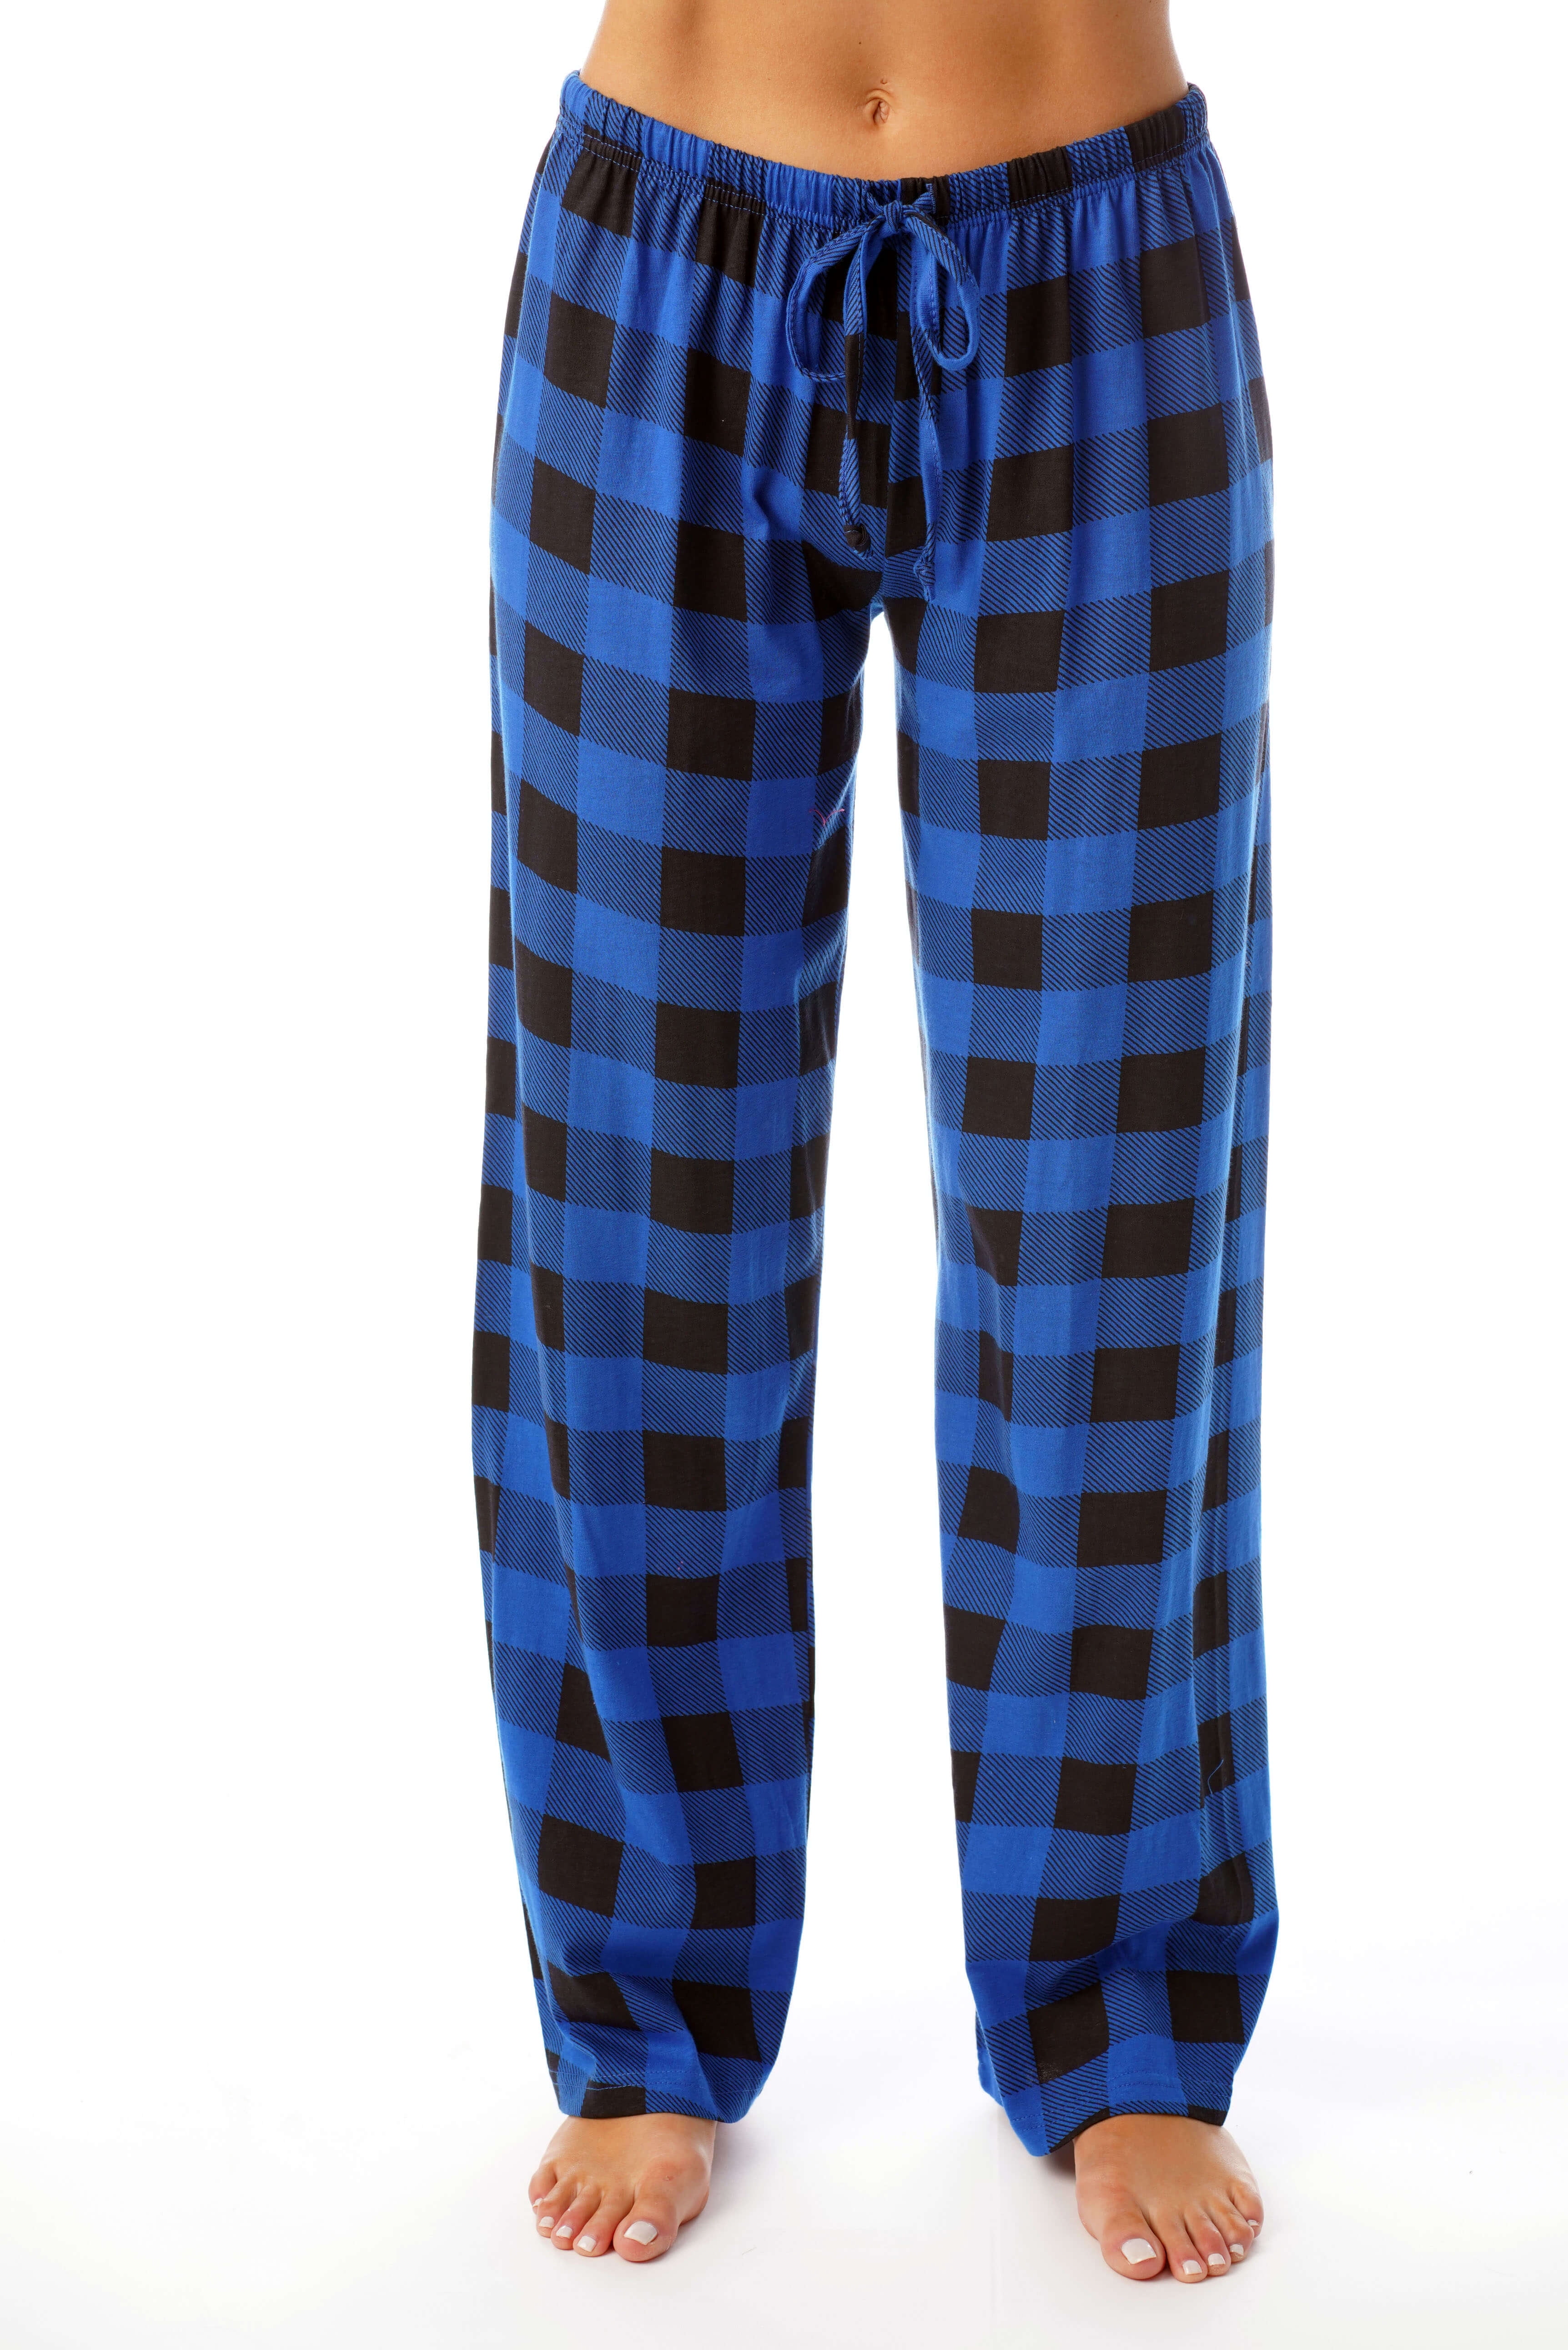 Just Love Women Buffalo Plaid Pajama Pants Sleepwear. (Purple Black Buffalo  Plaid, Small)